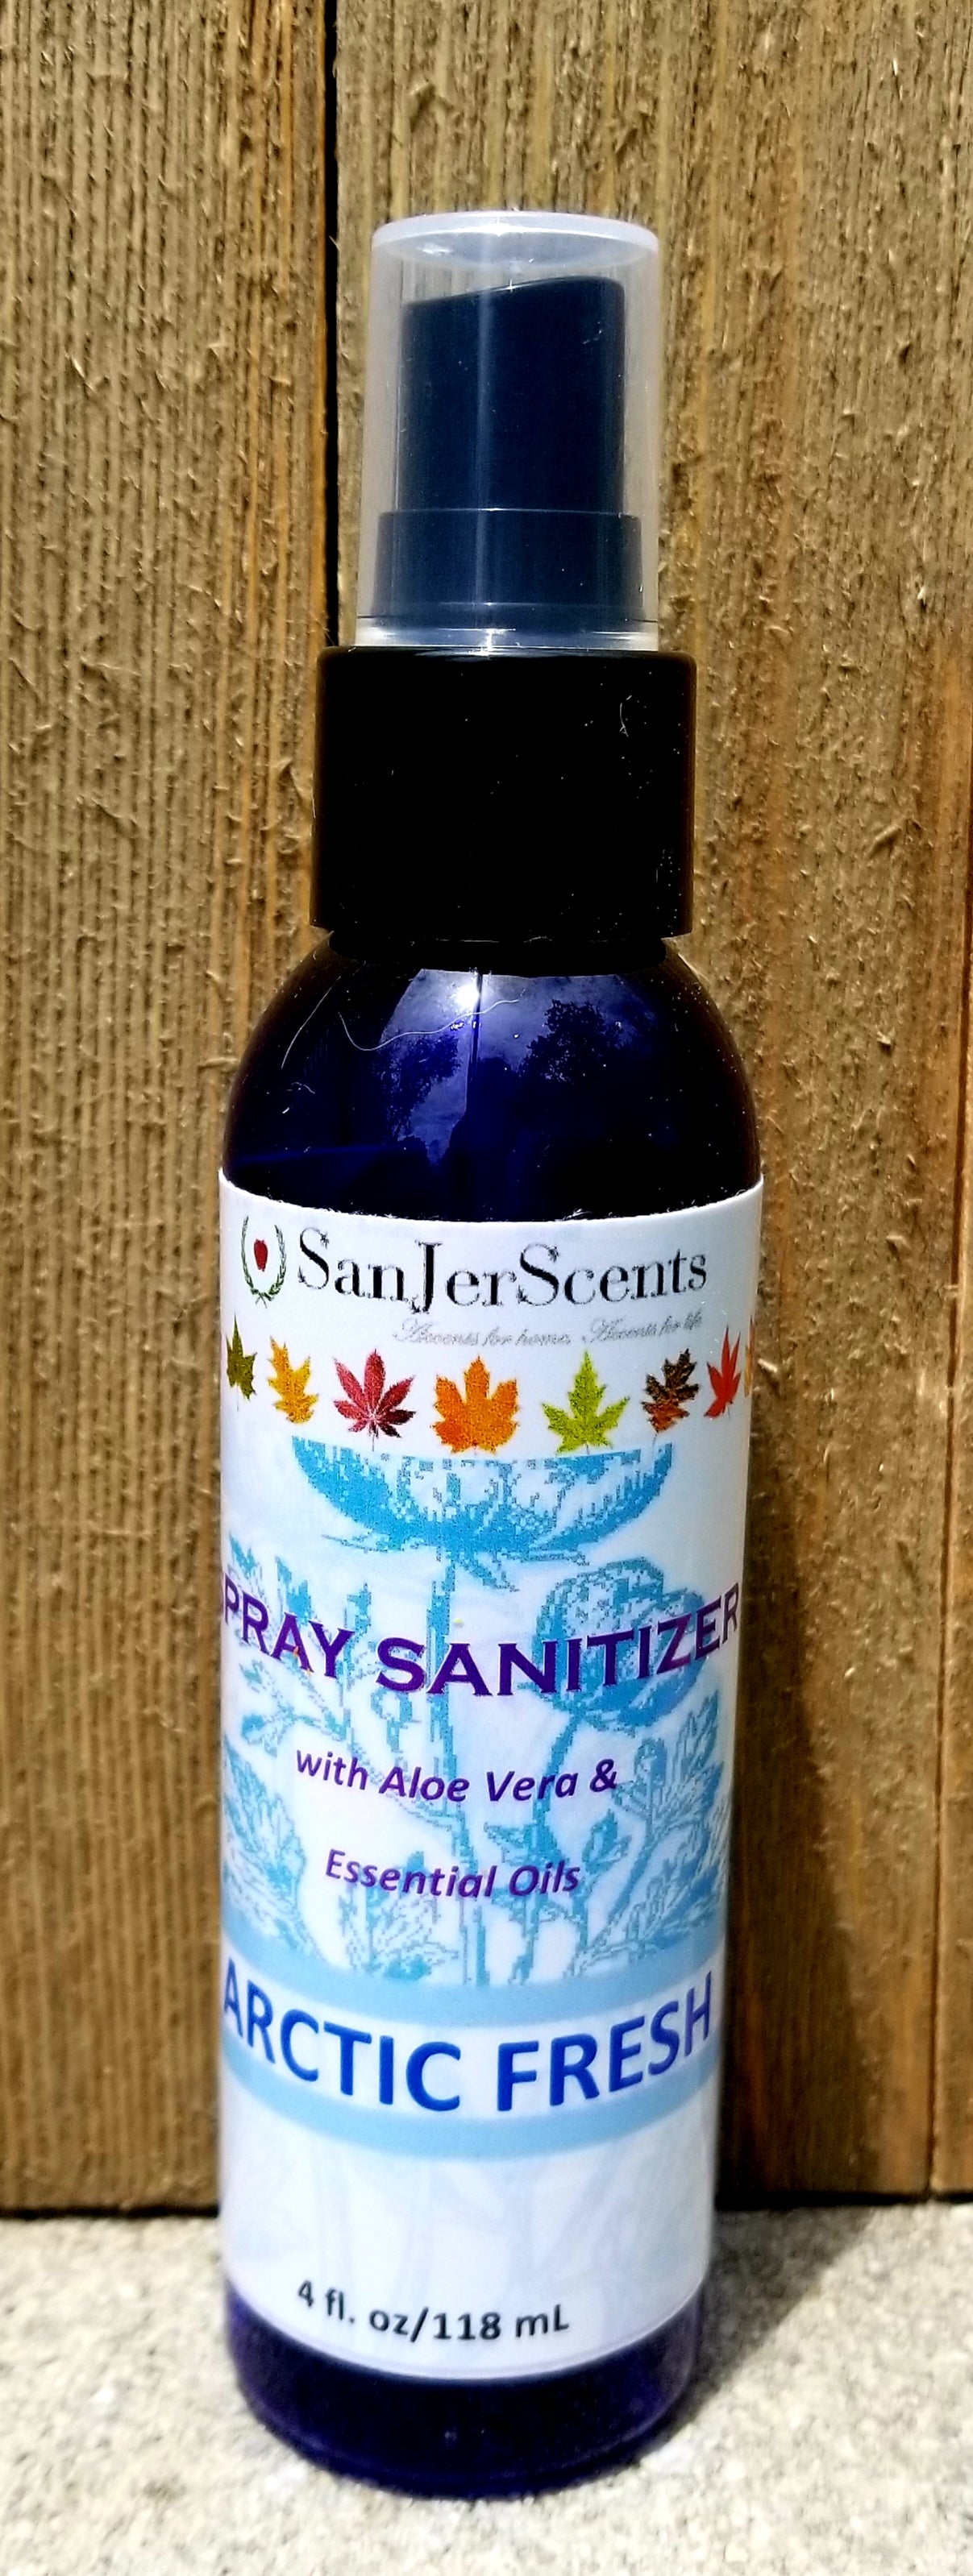 4 oz sanitizer spray bottle in Arctic Fresh scent